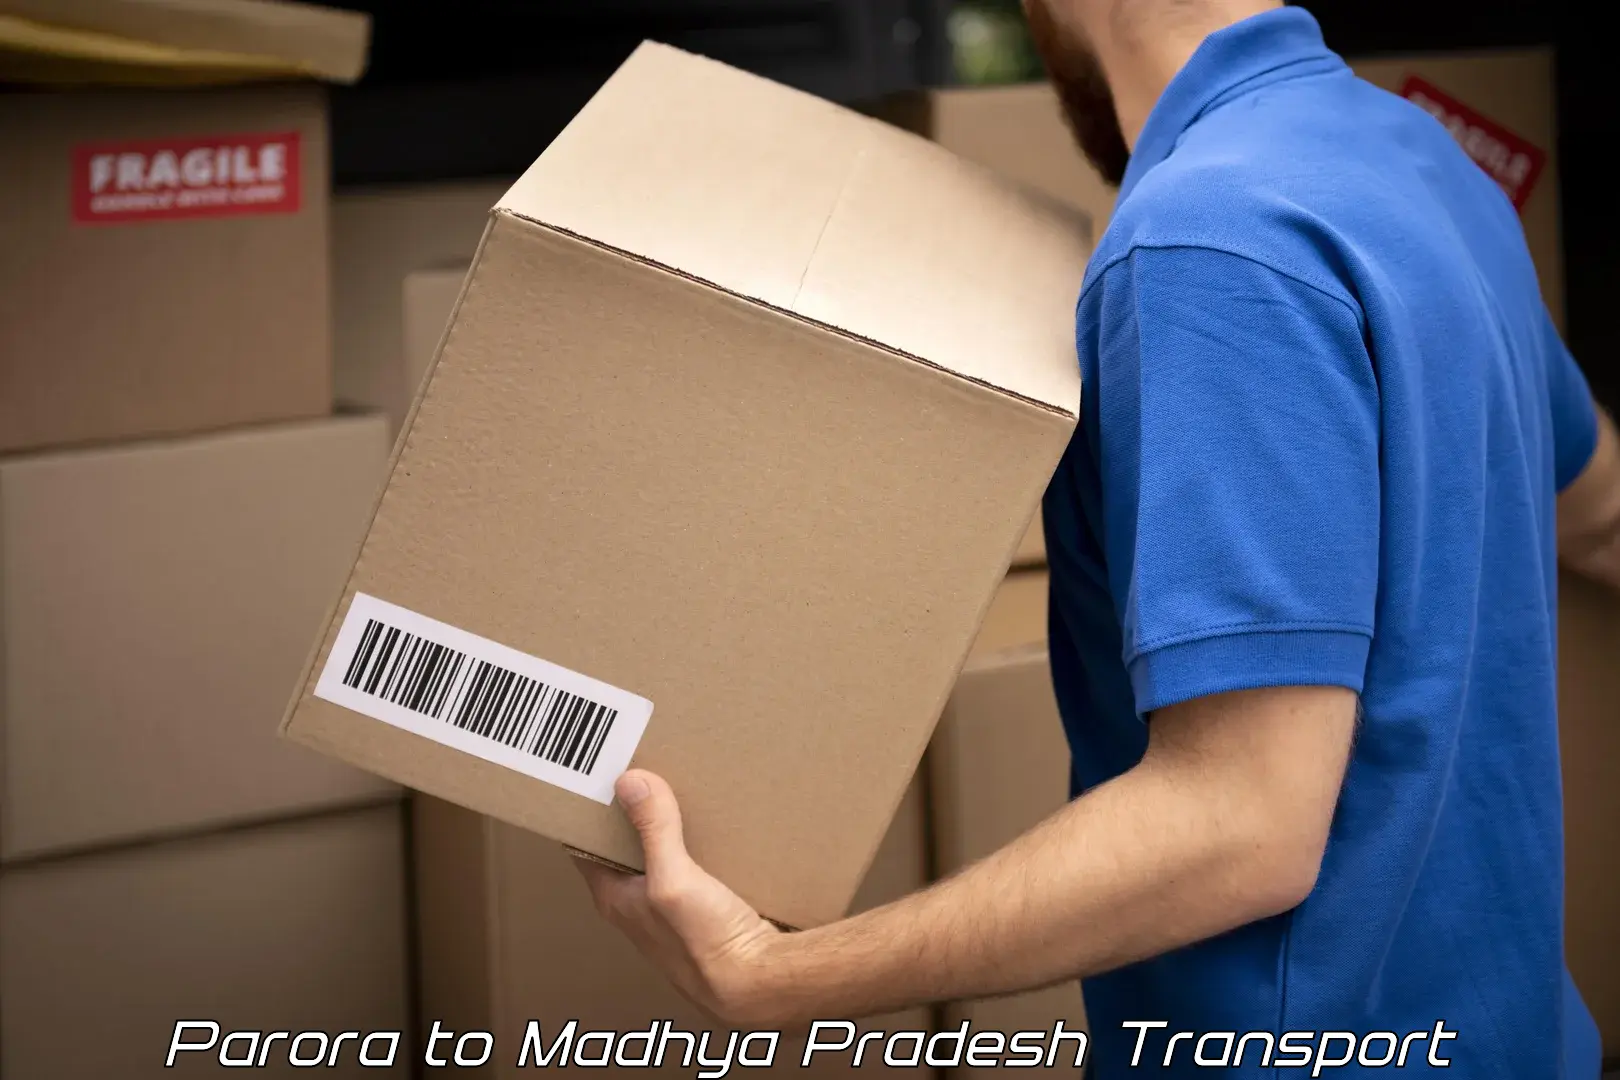 Pick up transport service Parora to Mundi